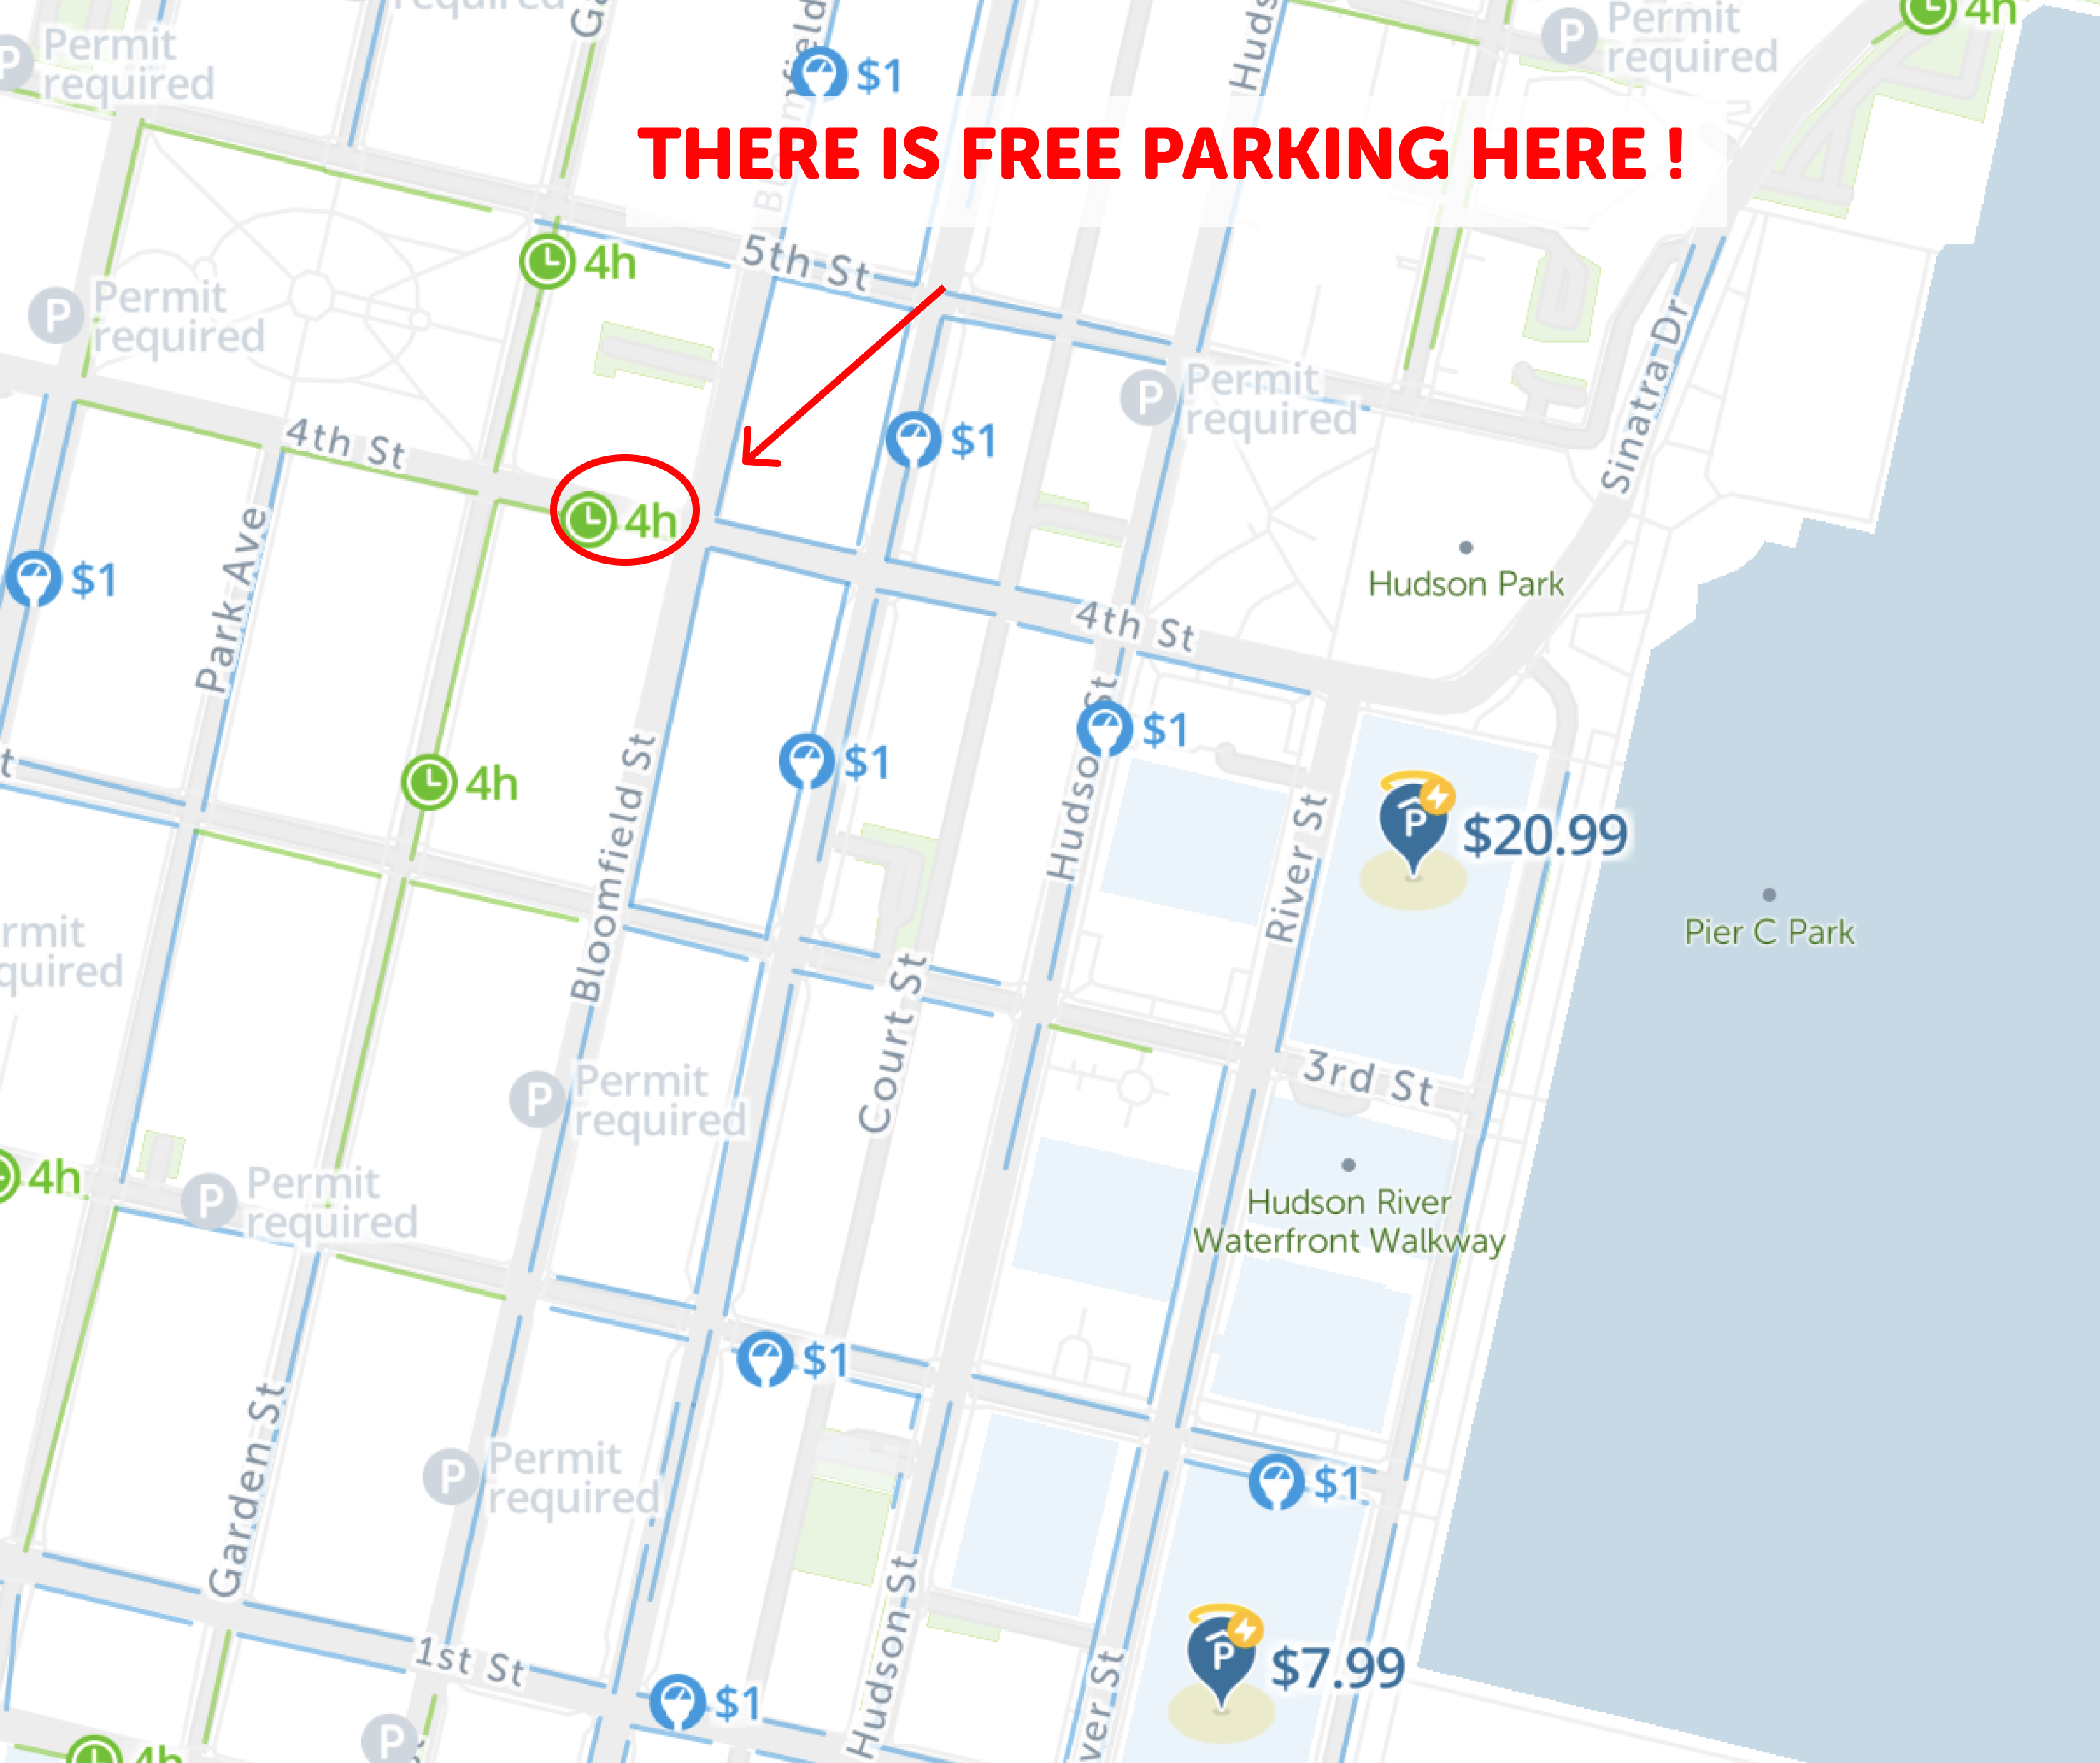 map of free parking in Hoboken - SpotAngels